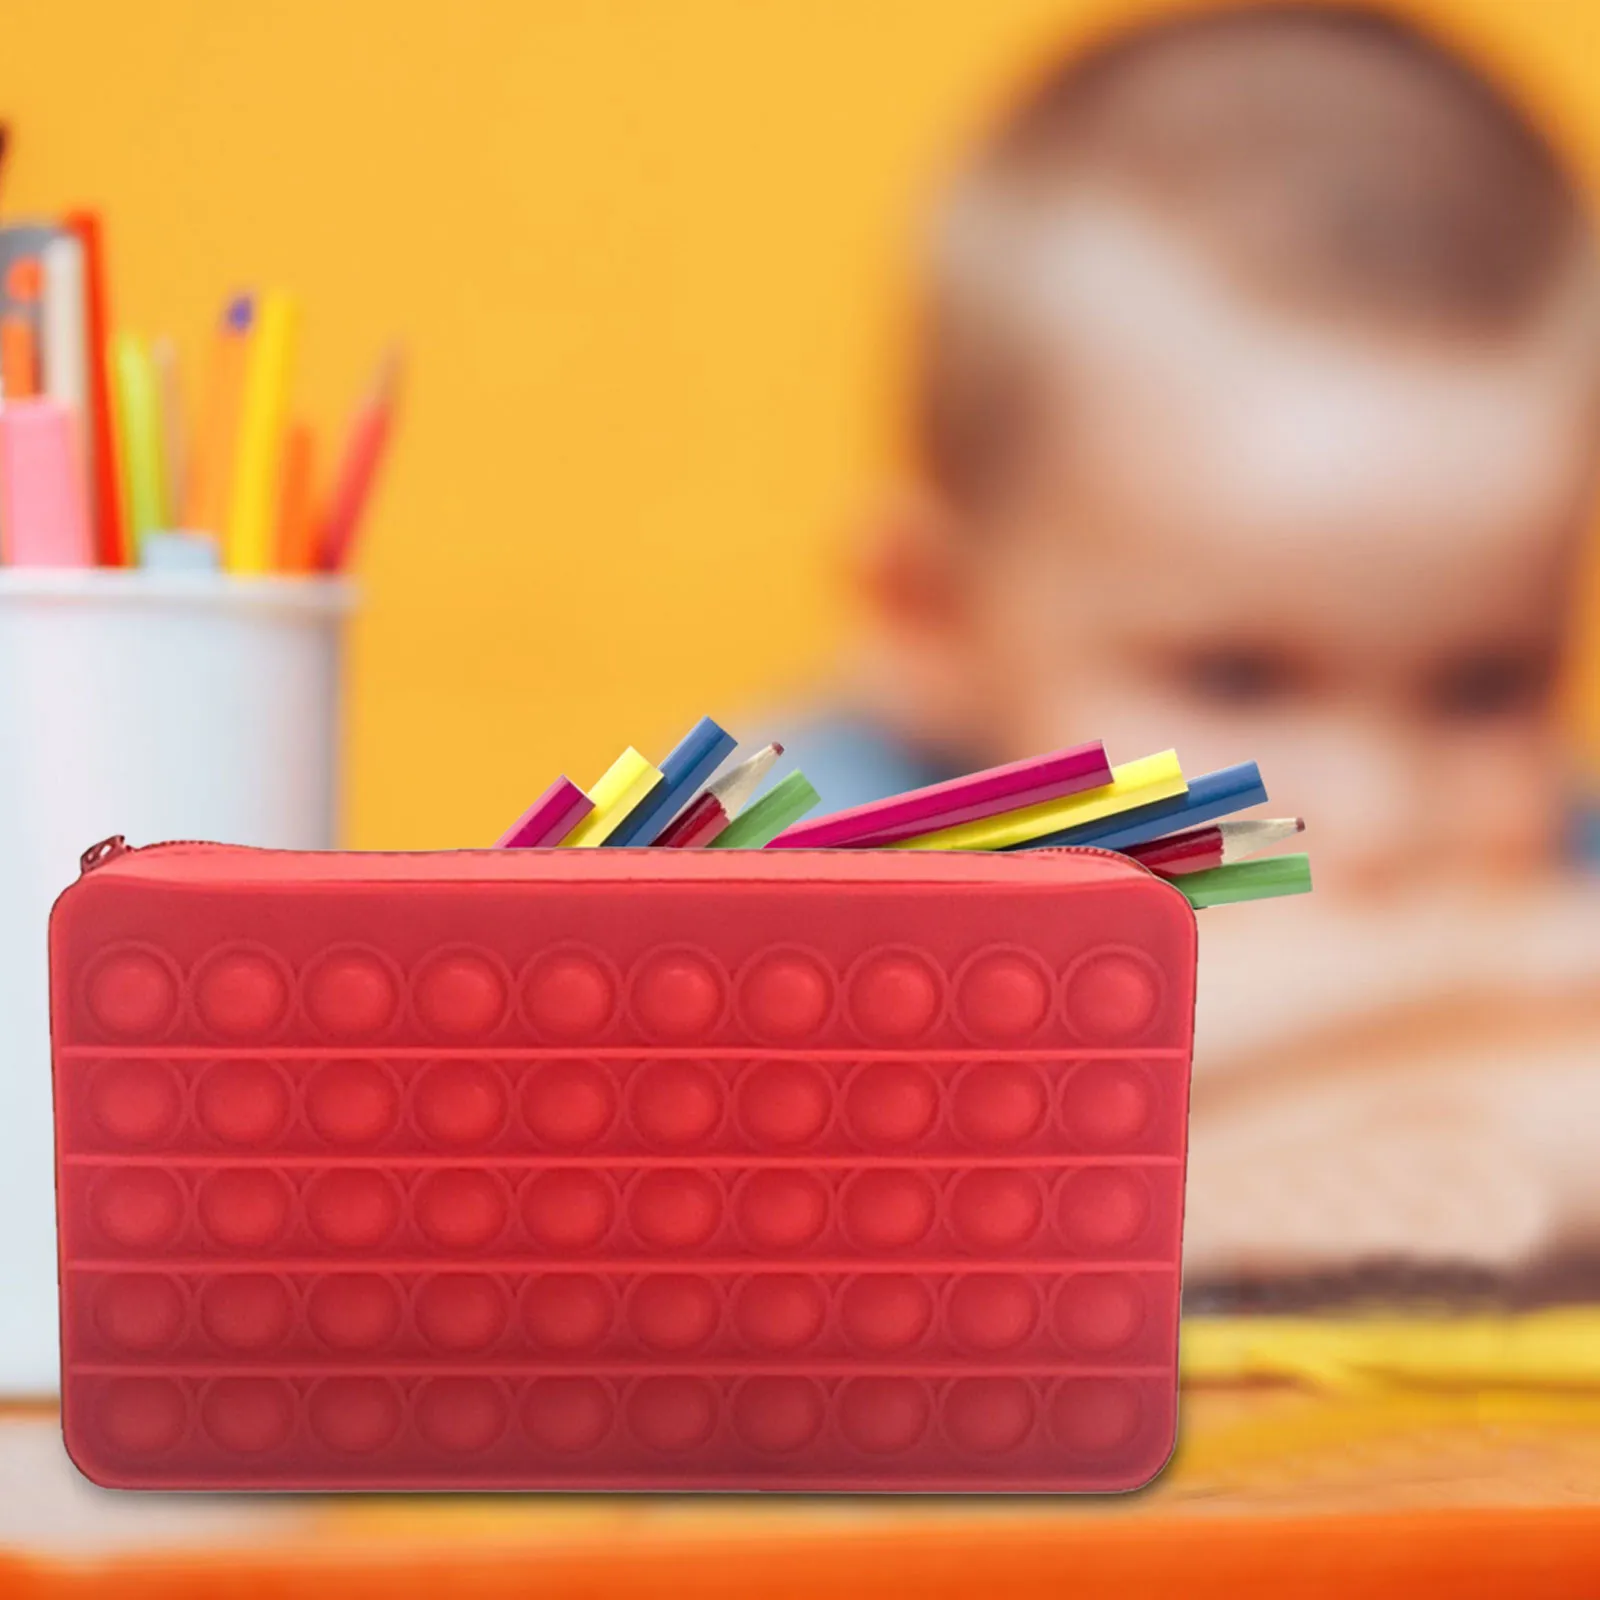 New Toy Pencil Case Children's Decompression Squeeze Toy Compression Bubble Coin Purse Pencil Case Mobile Phone Bag enlarge